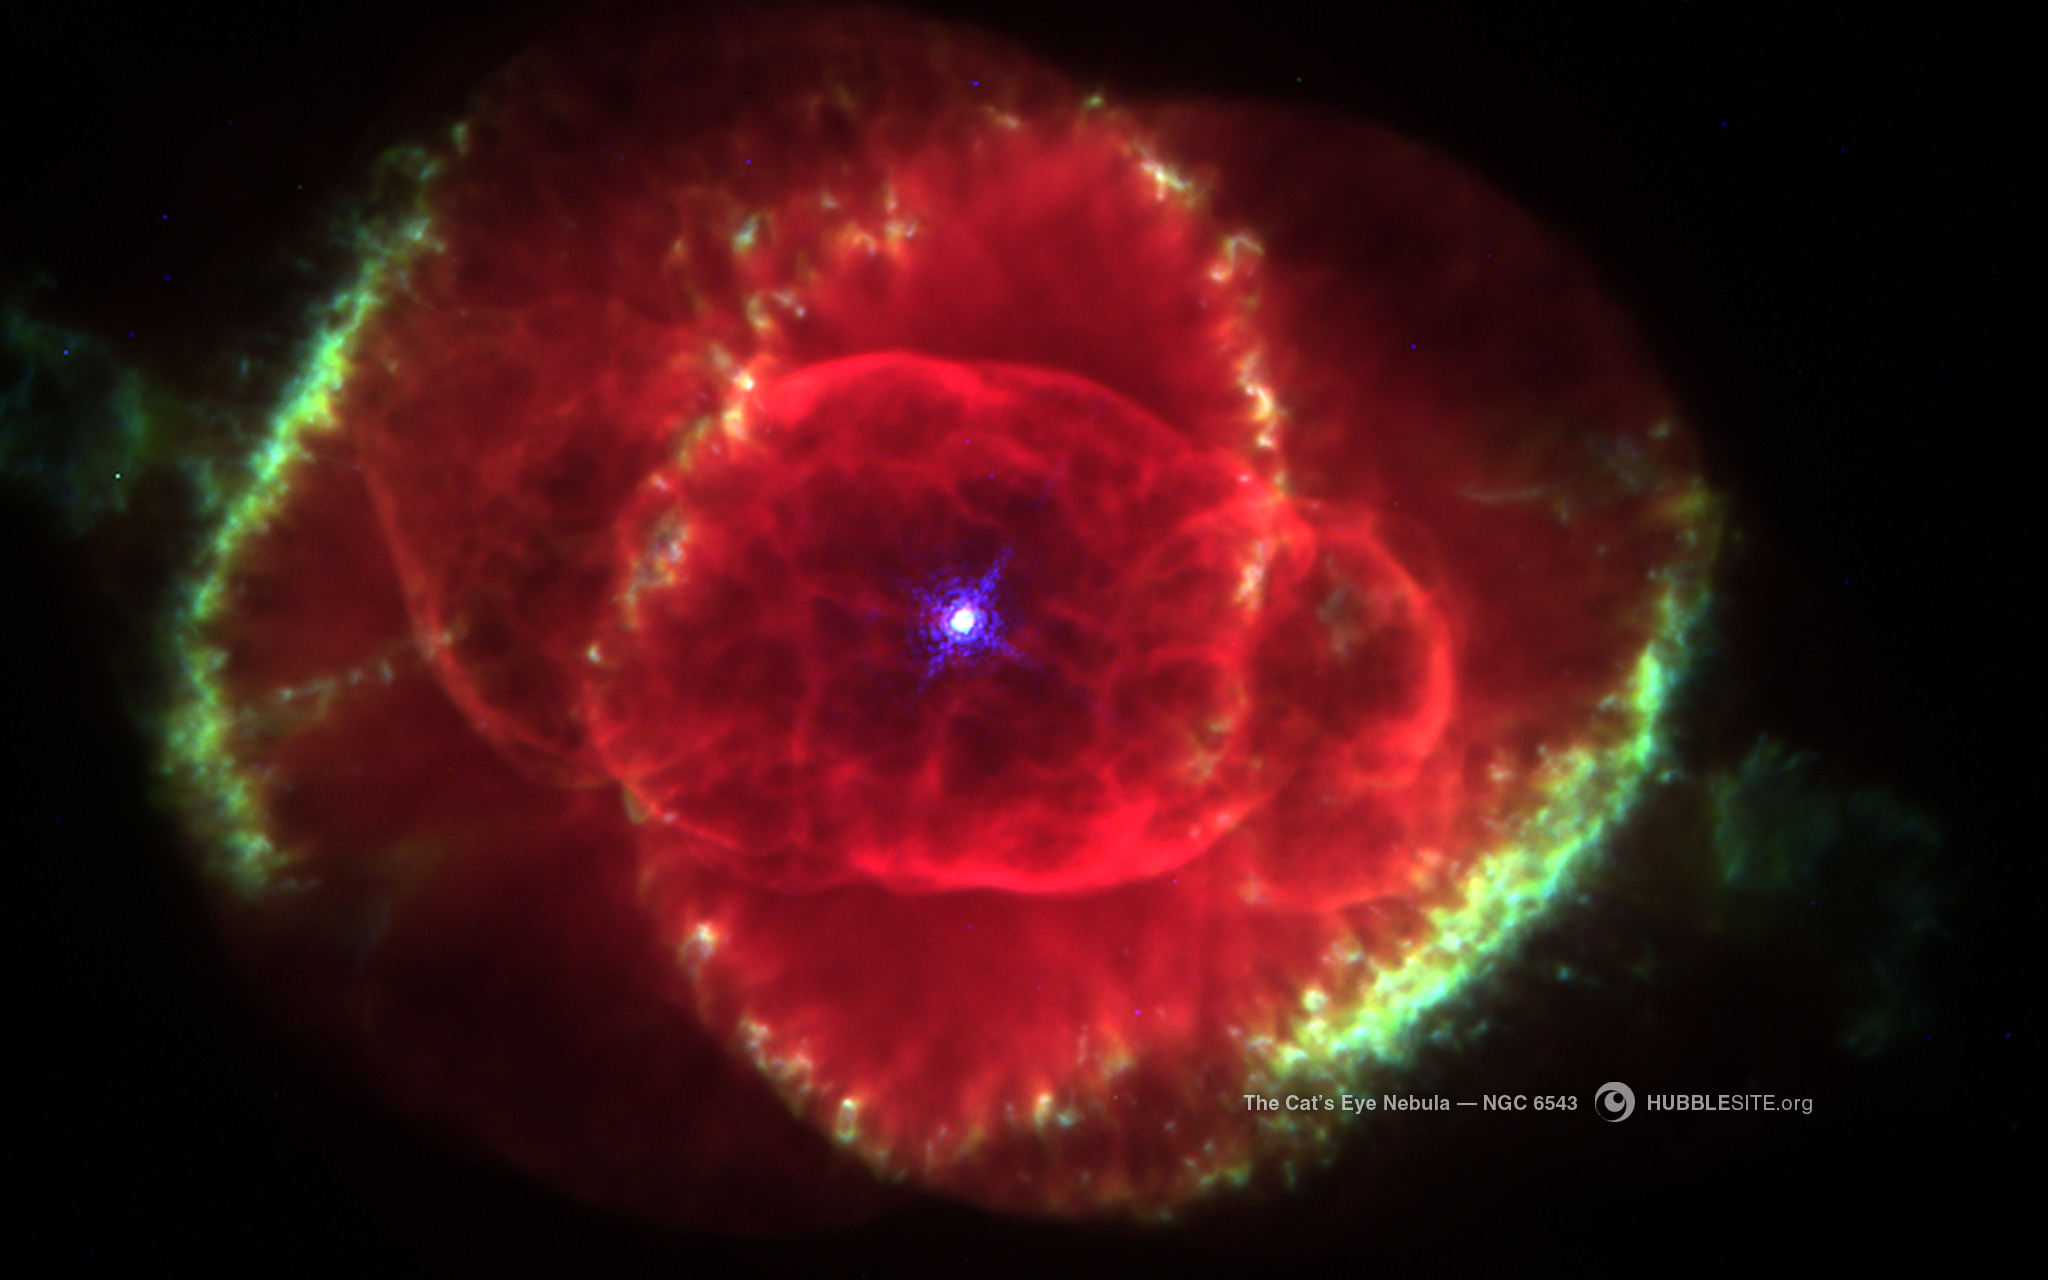 The Cat's Eye Nebula NGC 6543